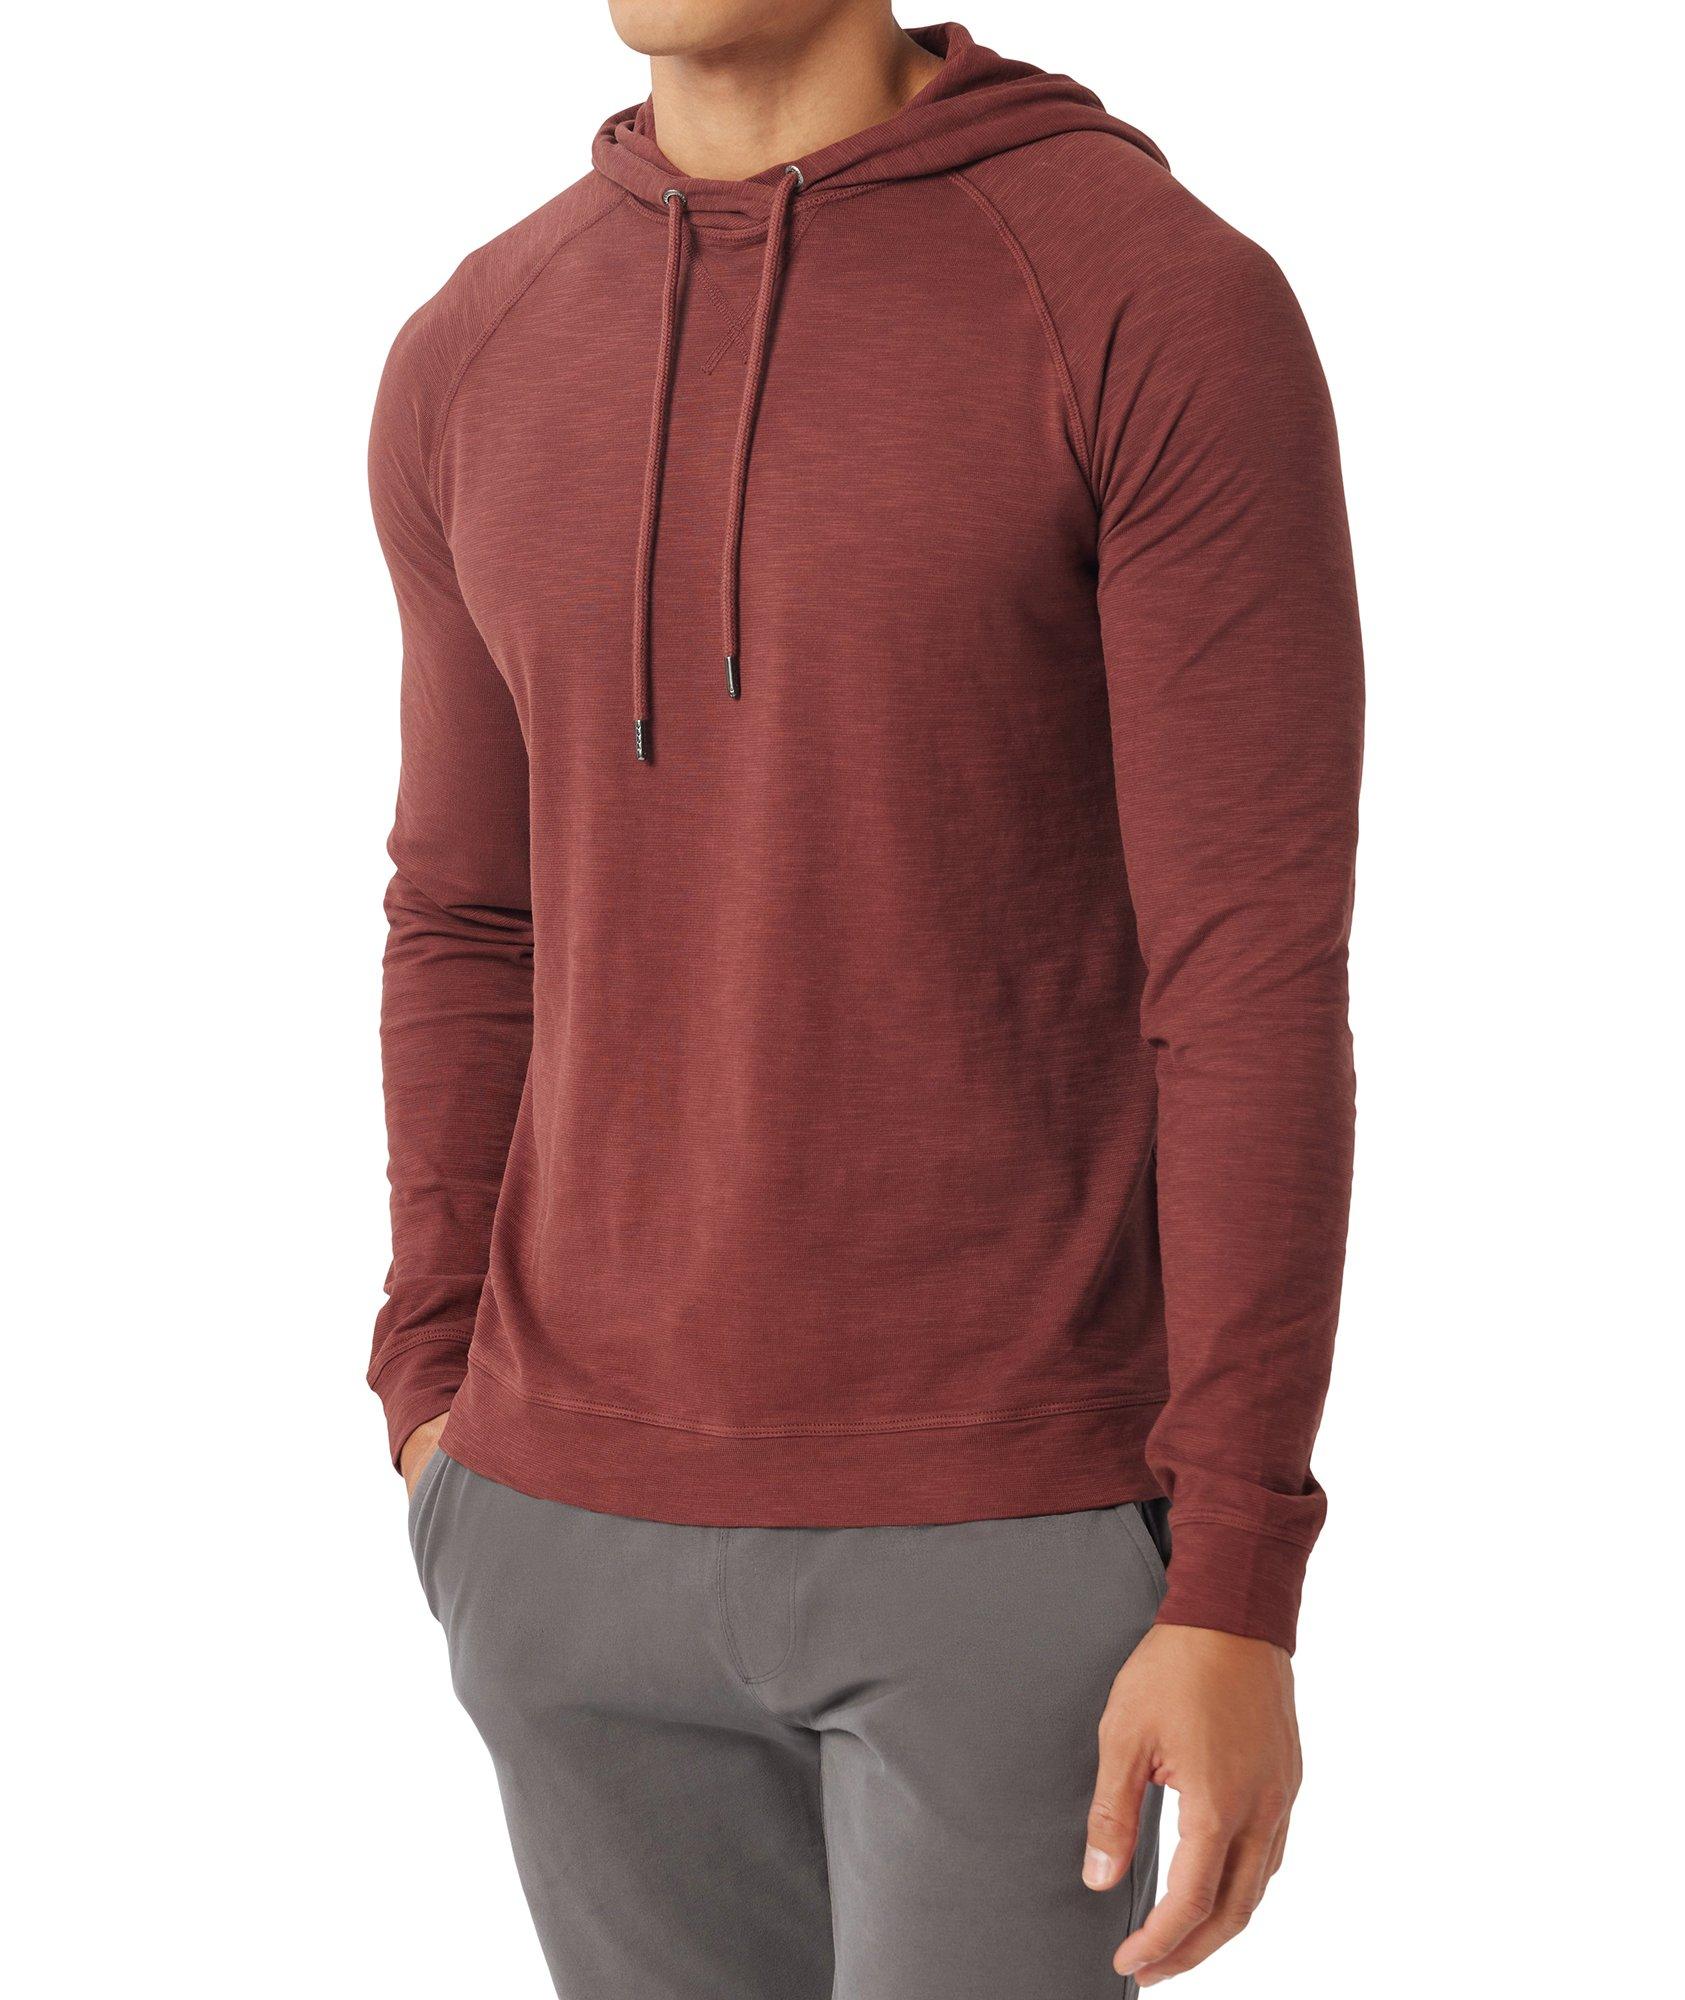 Long-Sleeve Soft Slub Hooded Sweater image 1